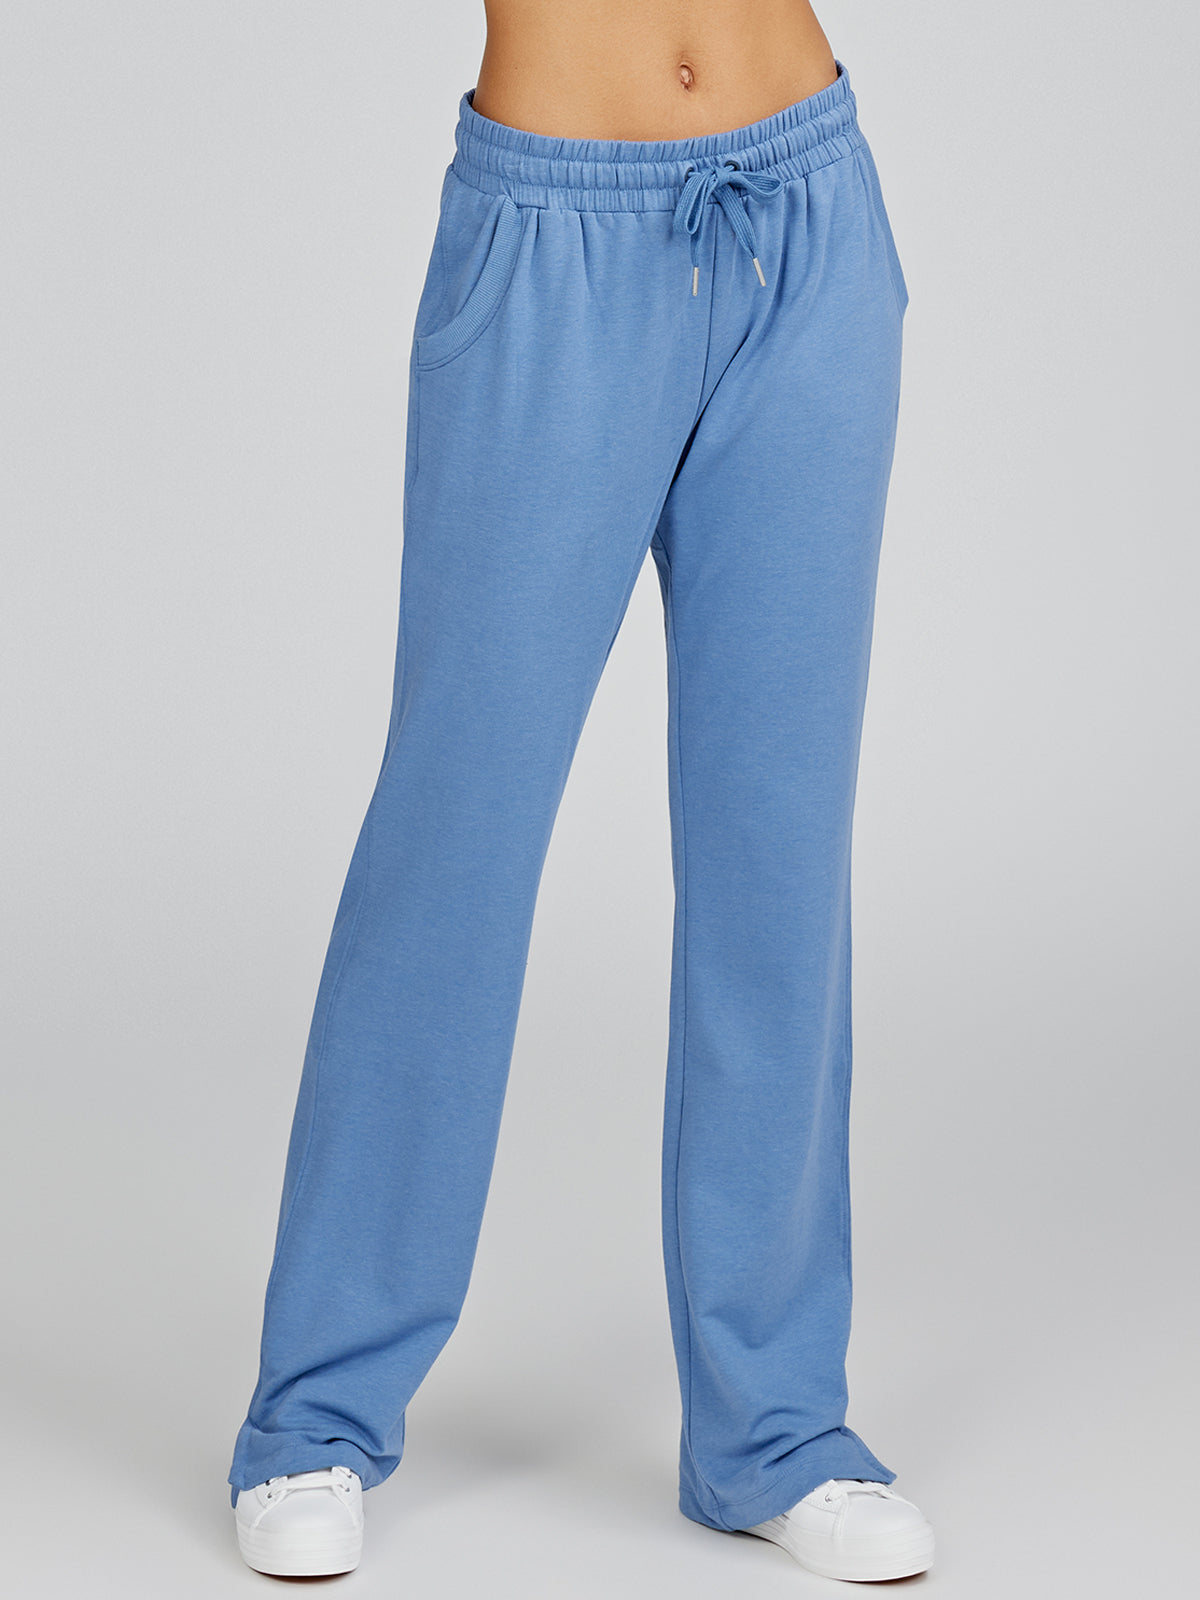 Men's Golf Ball Tee Blue Pajama Bottoms Lounge Pants Size Medium